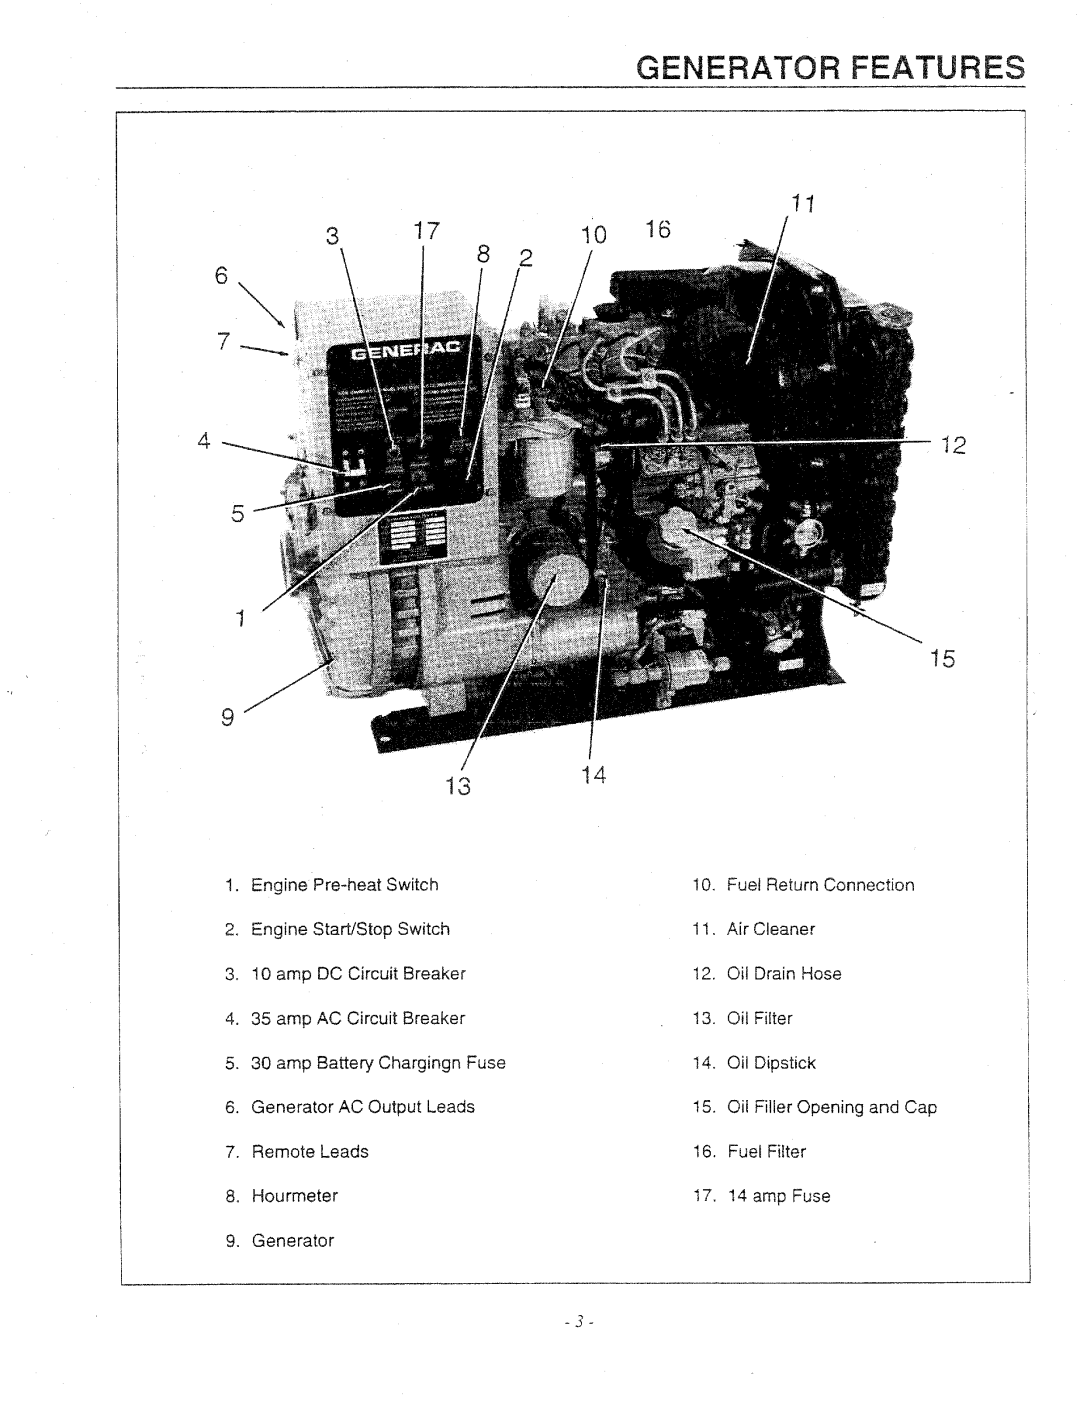 Generac Power Systems 9344-1 manual 